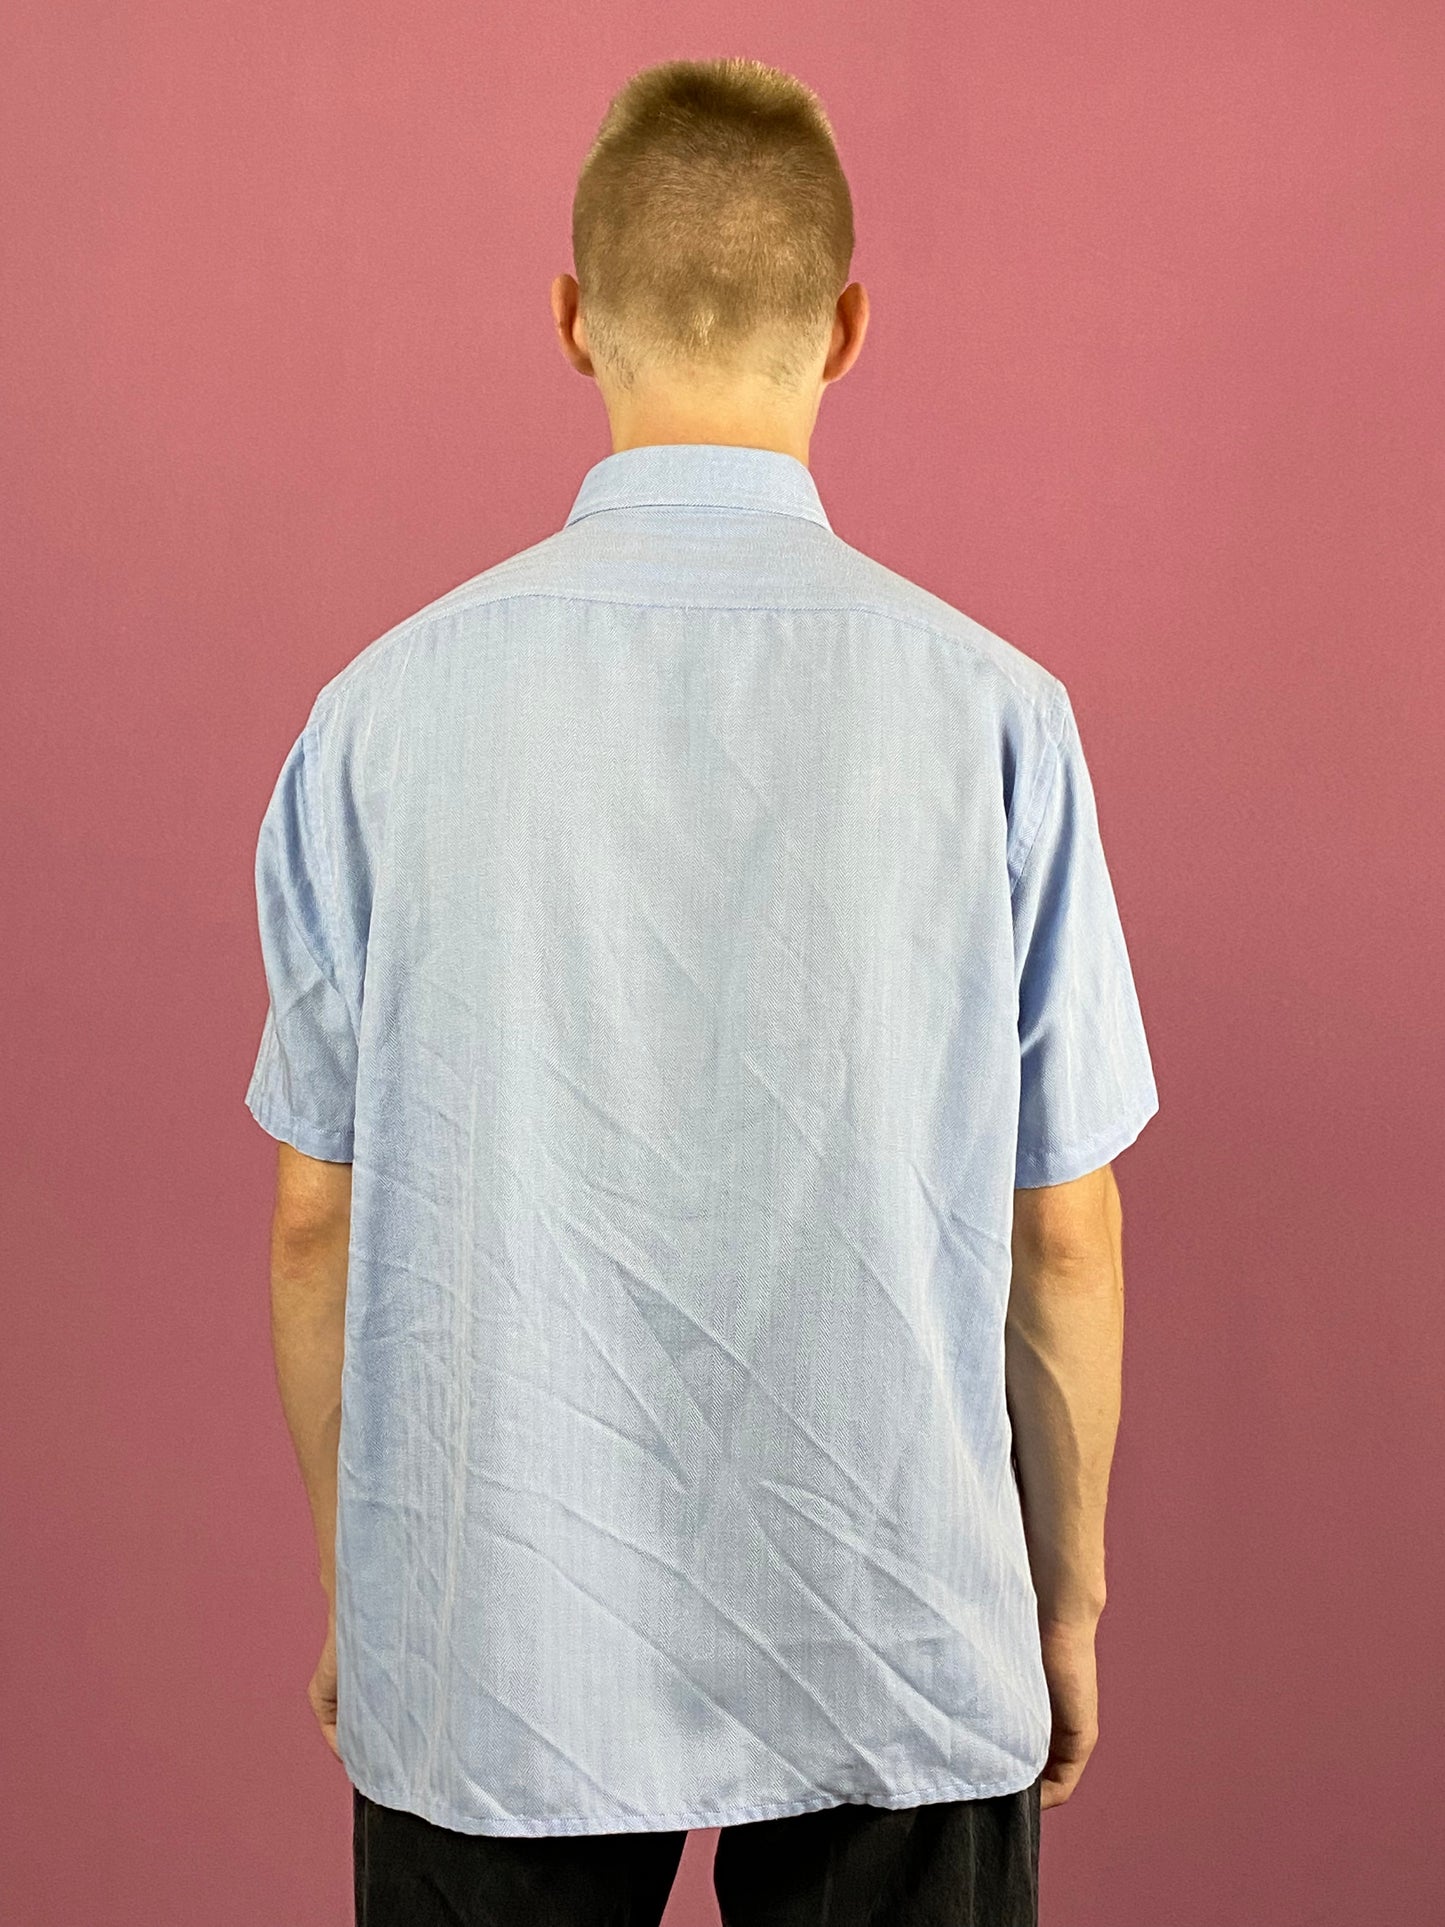 Yves Saint Laurent Vintage Men's Short Sleeve Shirt - XL Blue